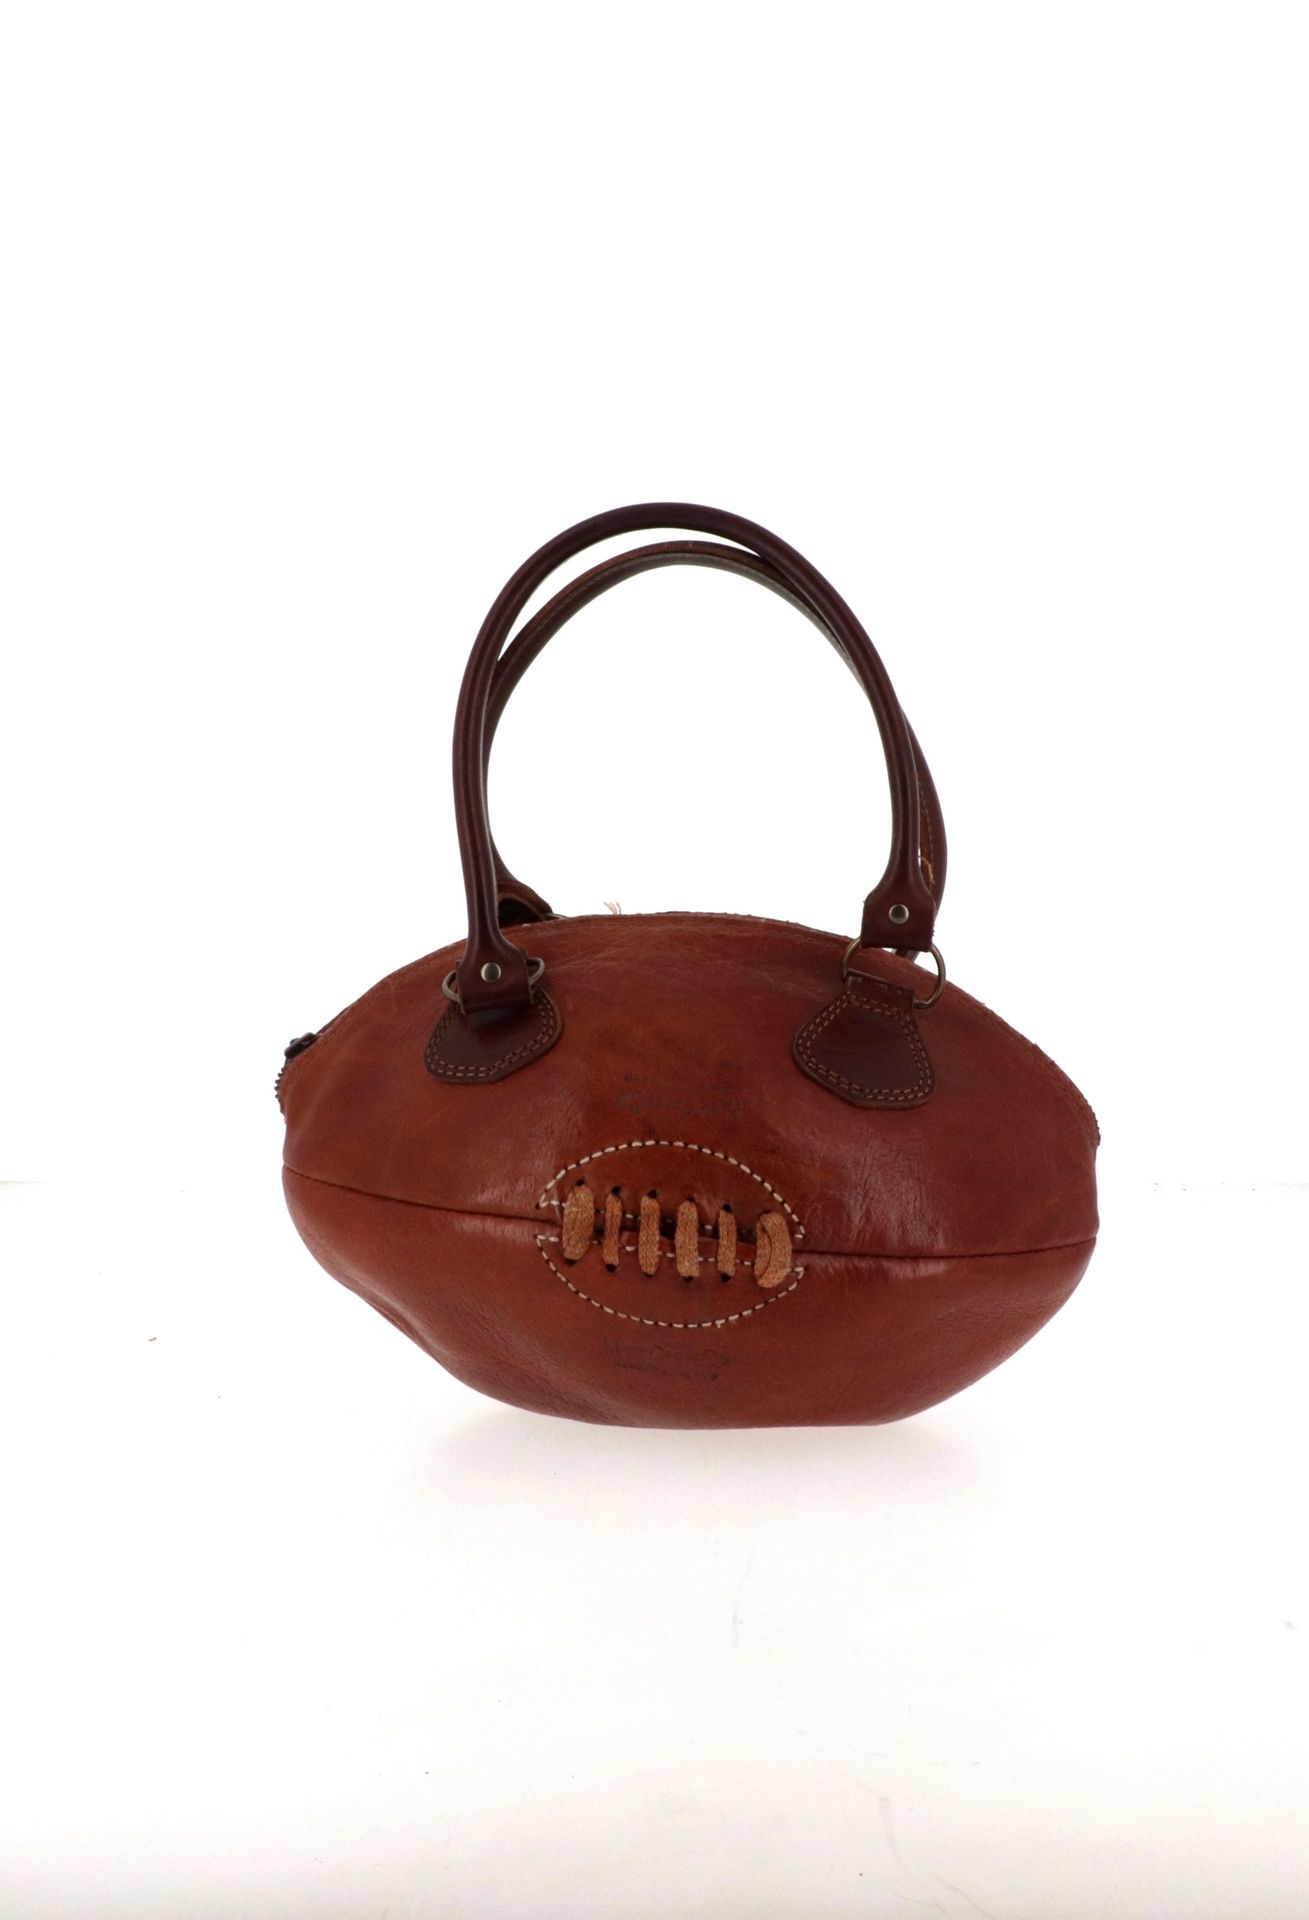 MAISON MARTIN MARGIELA Tasche "Rugbyball"

aus cognacfarbenem Leder, Messingbesc&hellip;